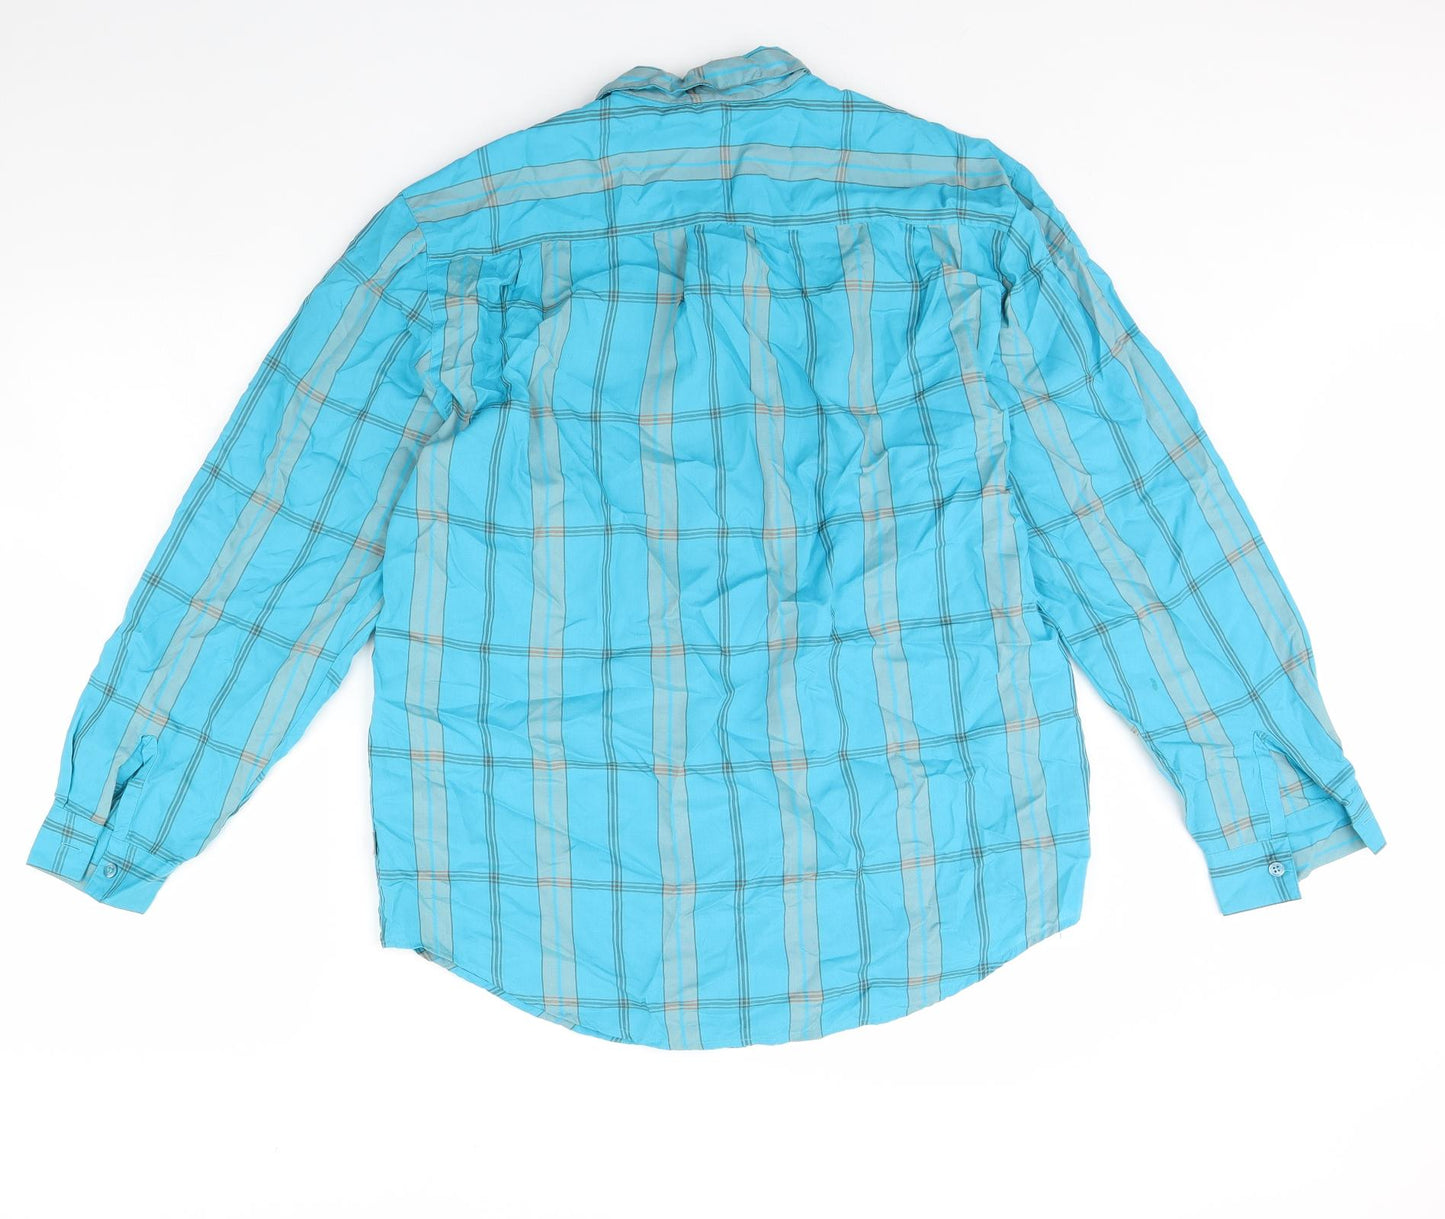 Mexx Mens Blue Check   Dress Shirt Size S